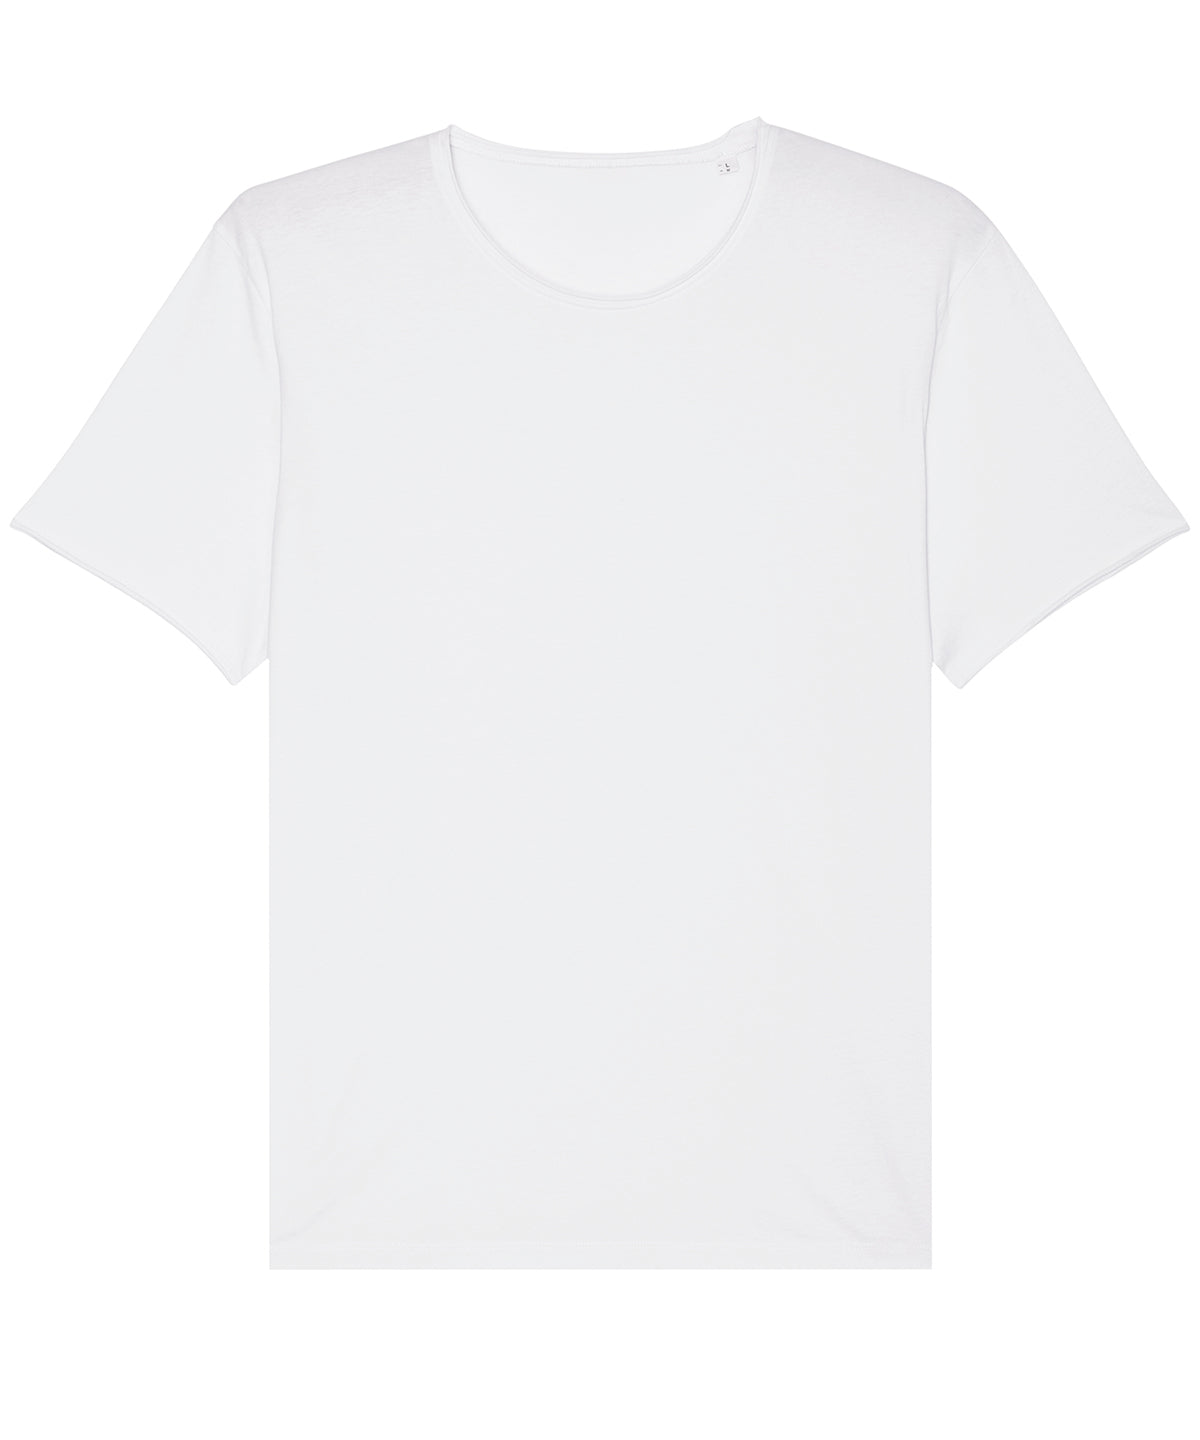 Stanley/Stella Imaginer, The Unisex Raw Edge T-Shirt